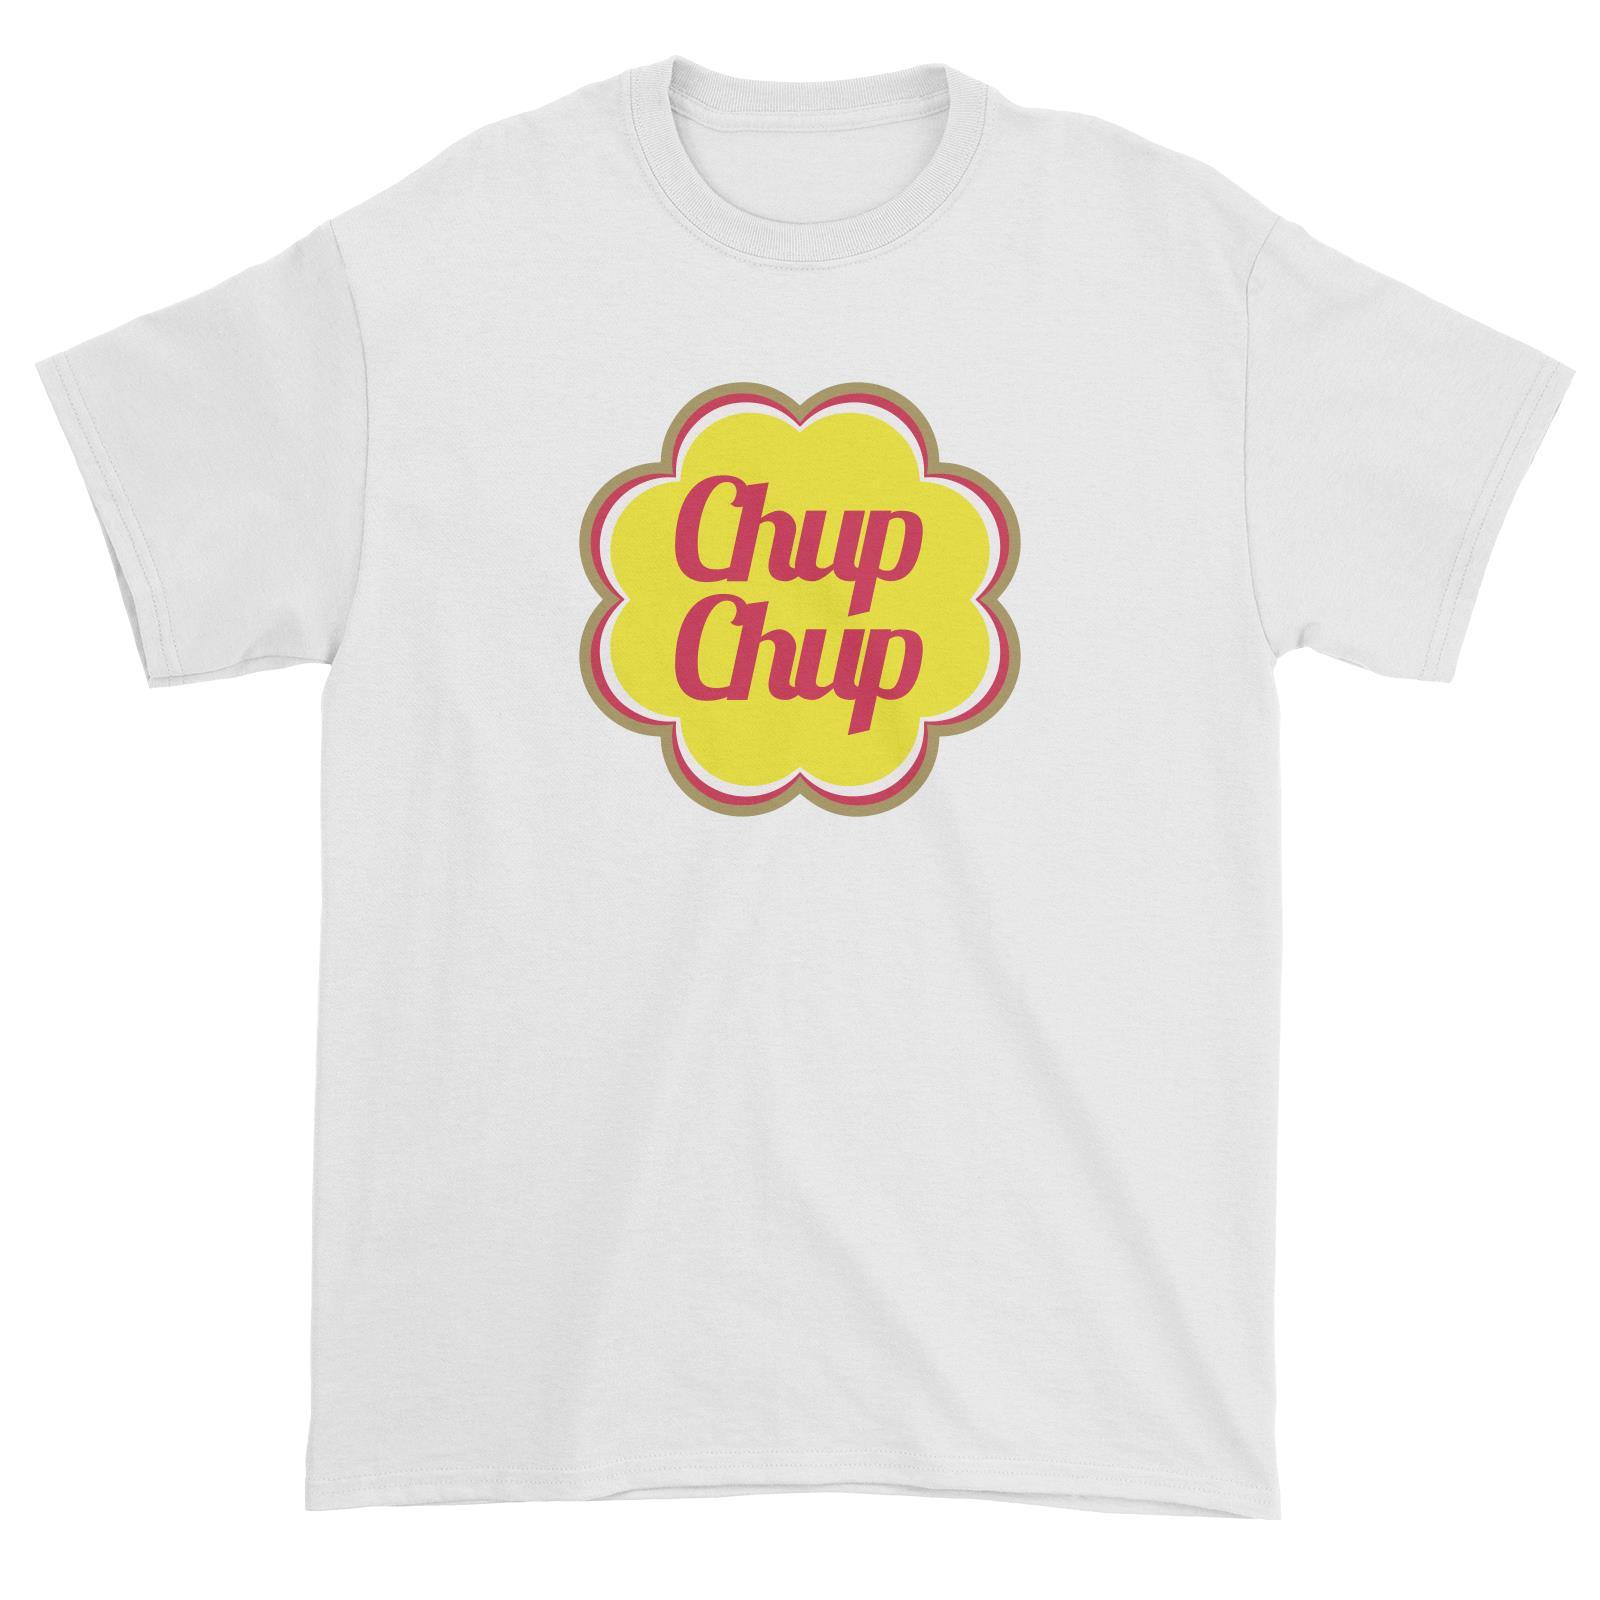 Slang Statement Chup Chup Unisex T-Shirt